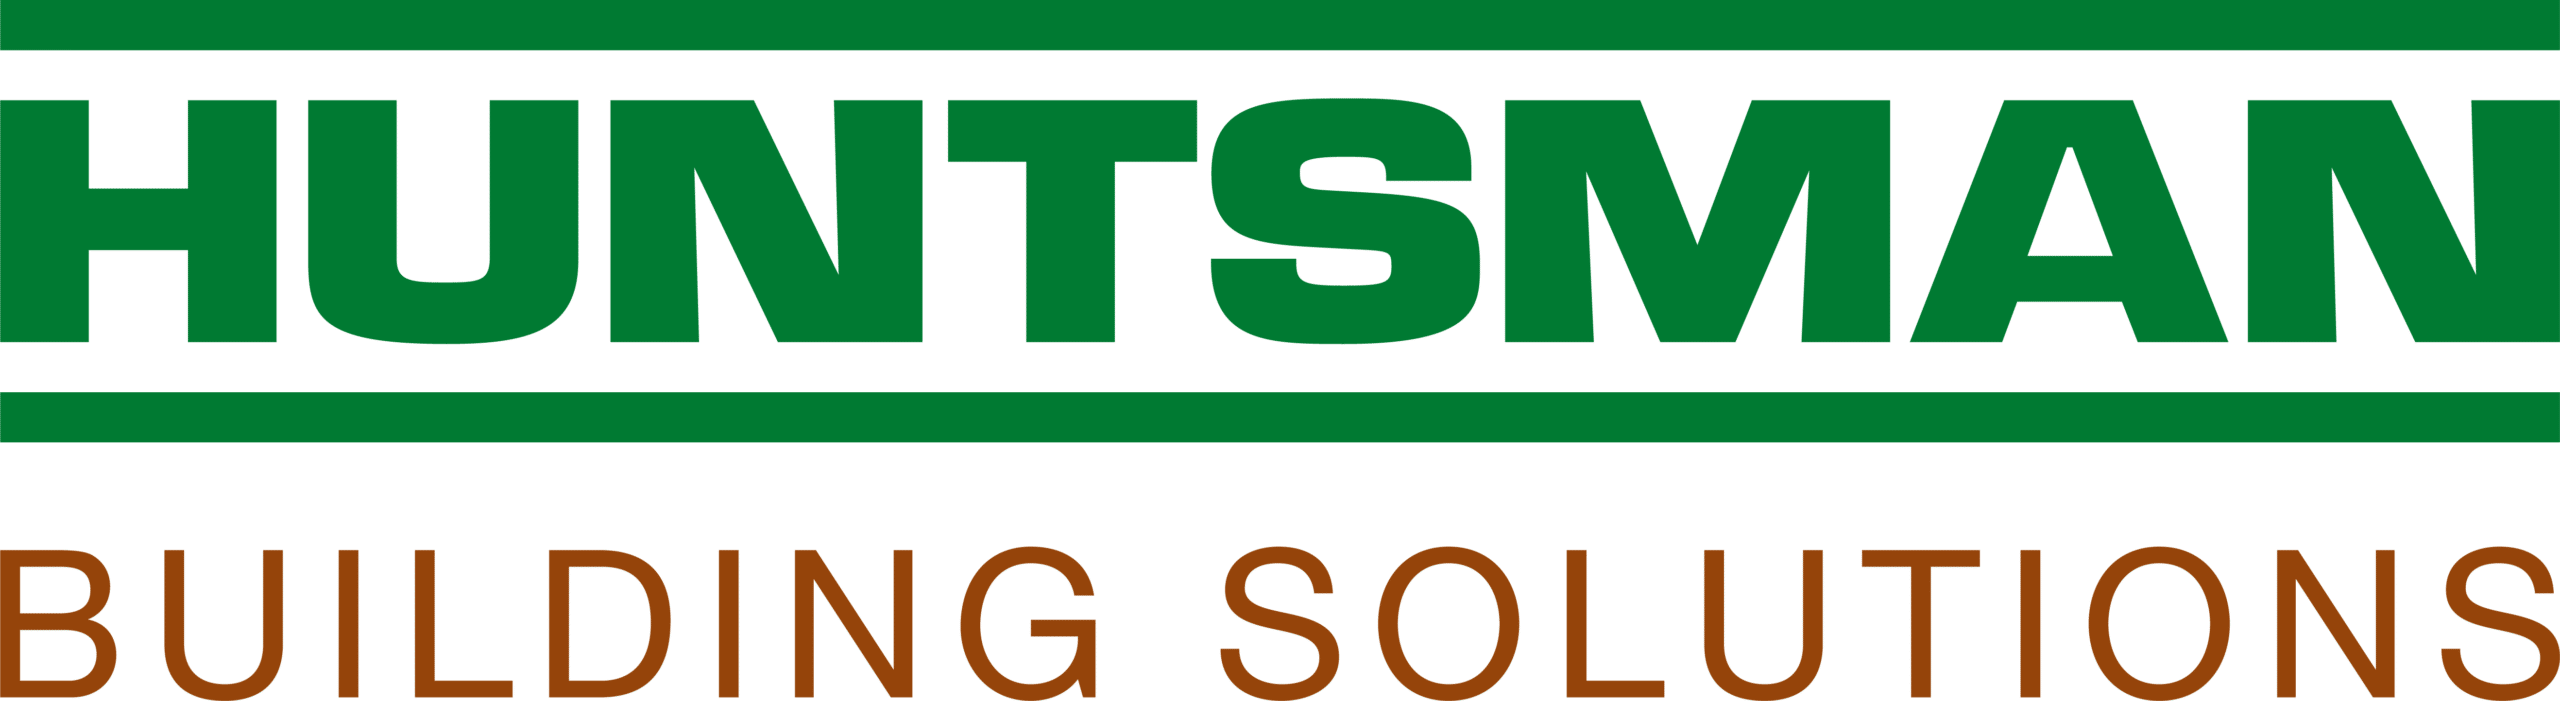 huntsman insulation building solution logo